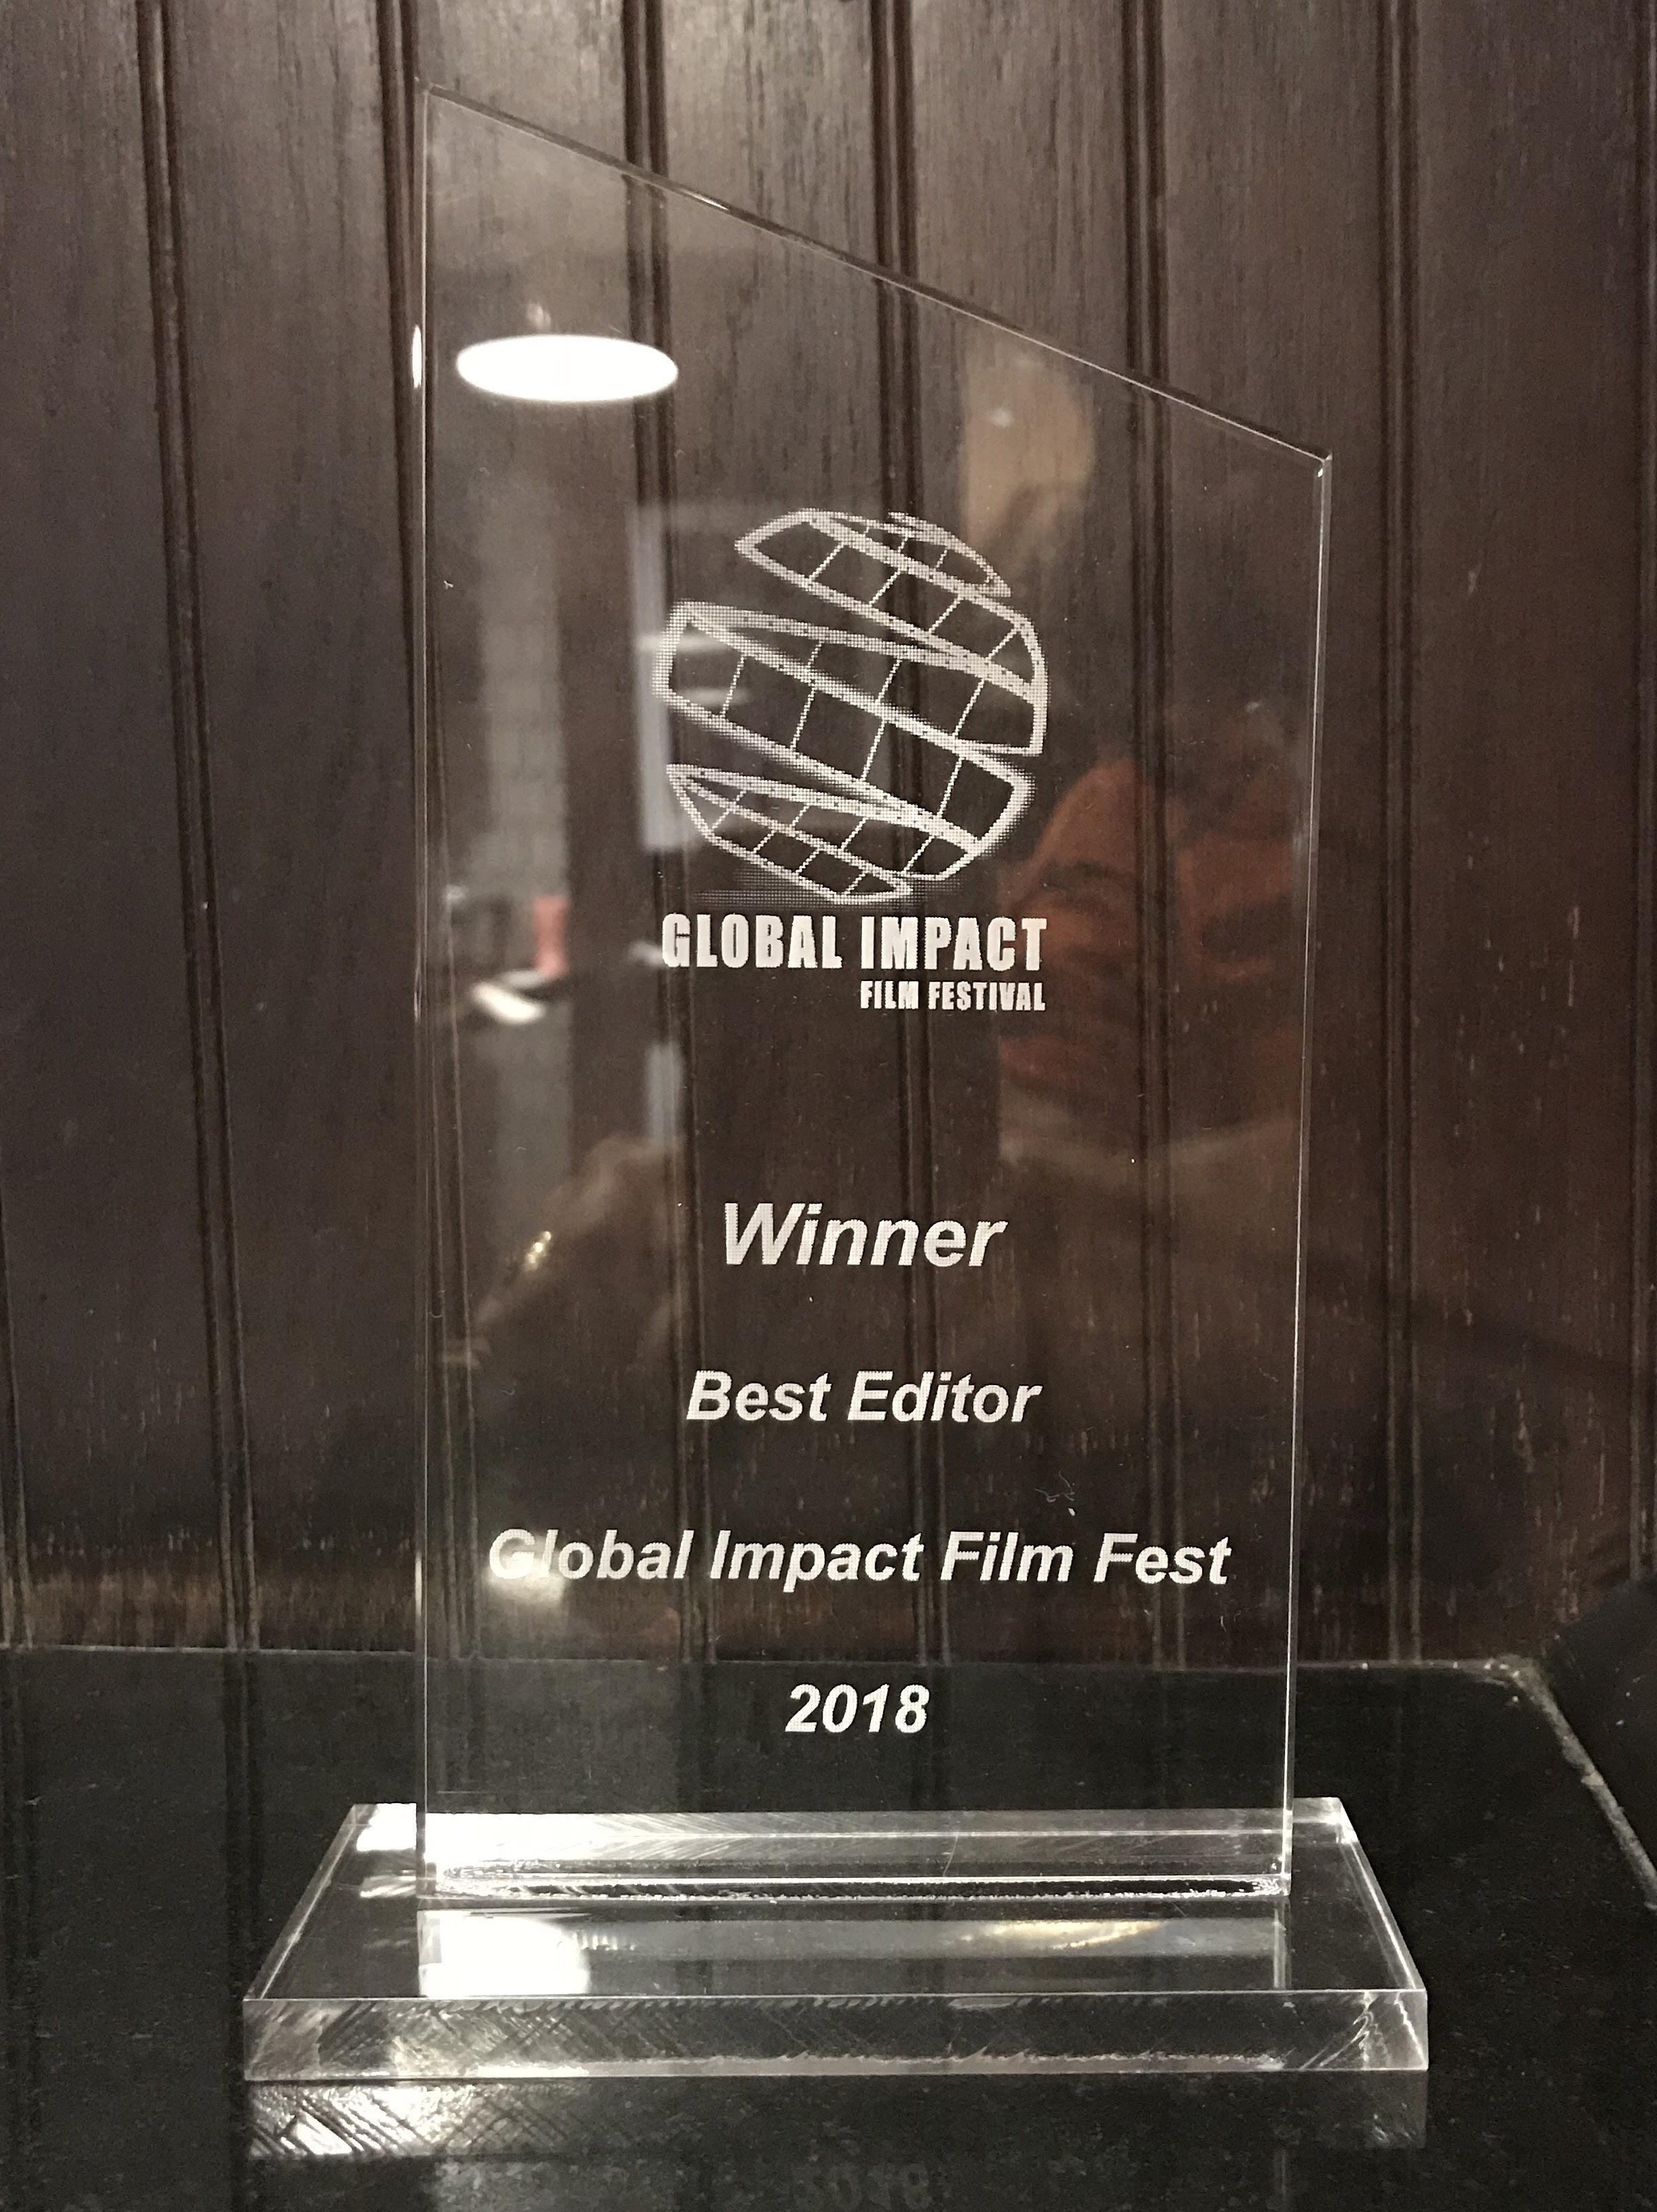 global impact film festival